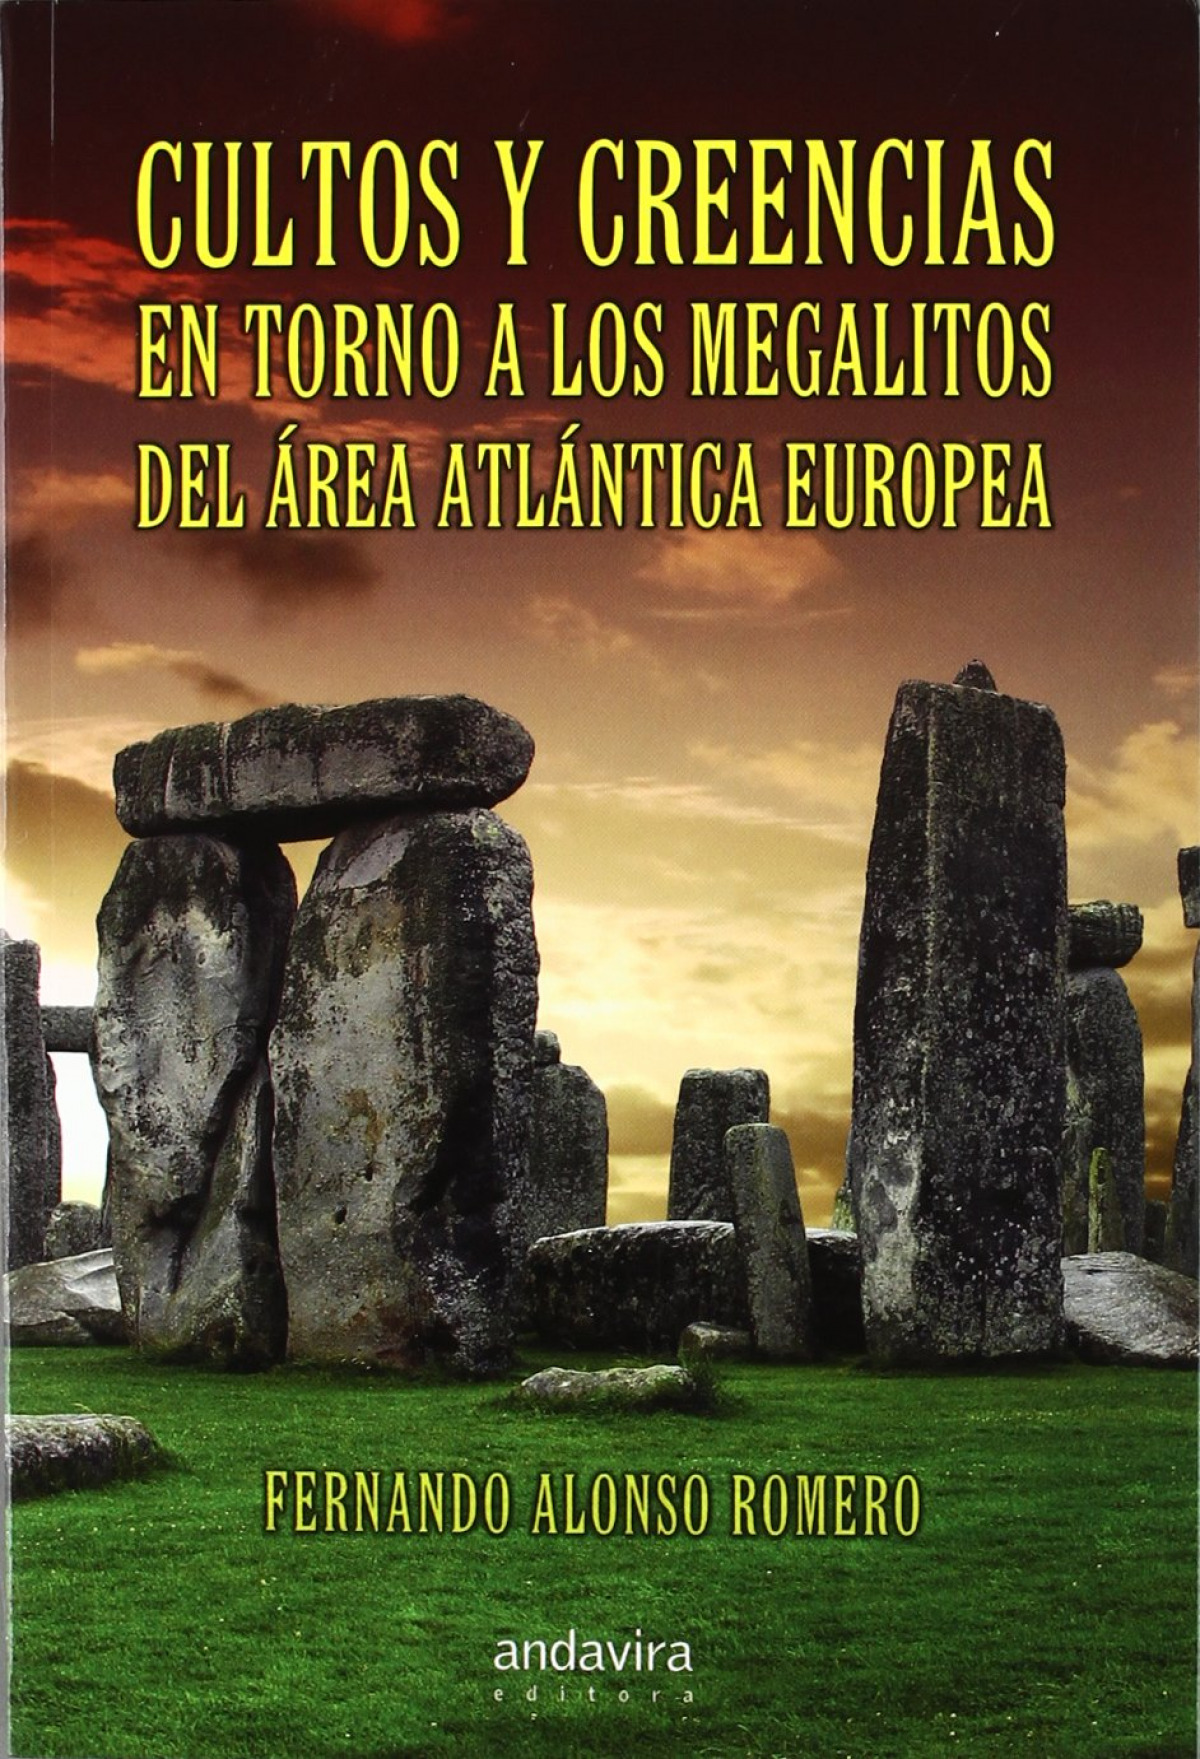 Cultos y creencias torno megalitos area Atlántica Europea - Alonso Romero, Fernando